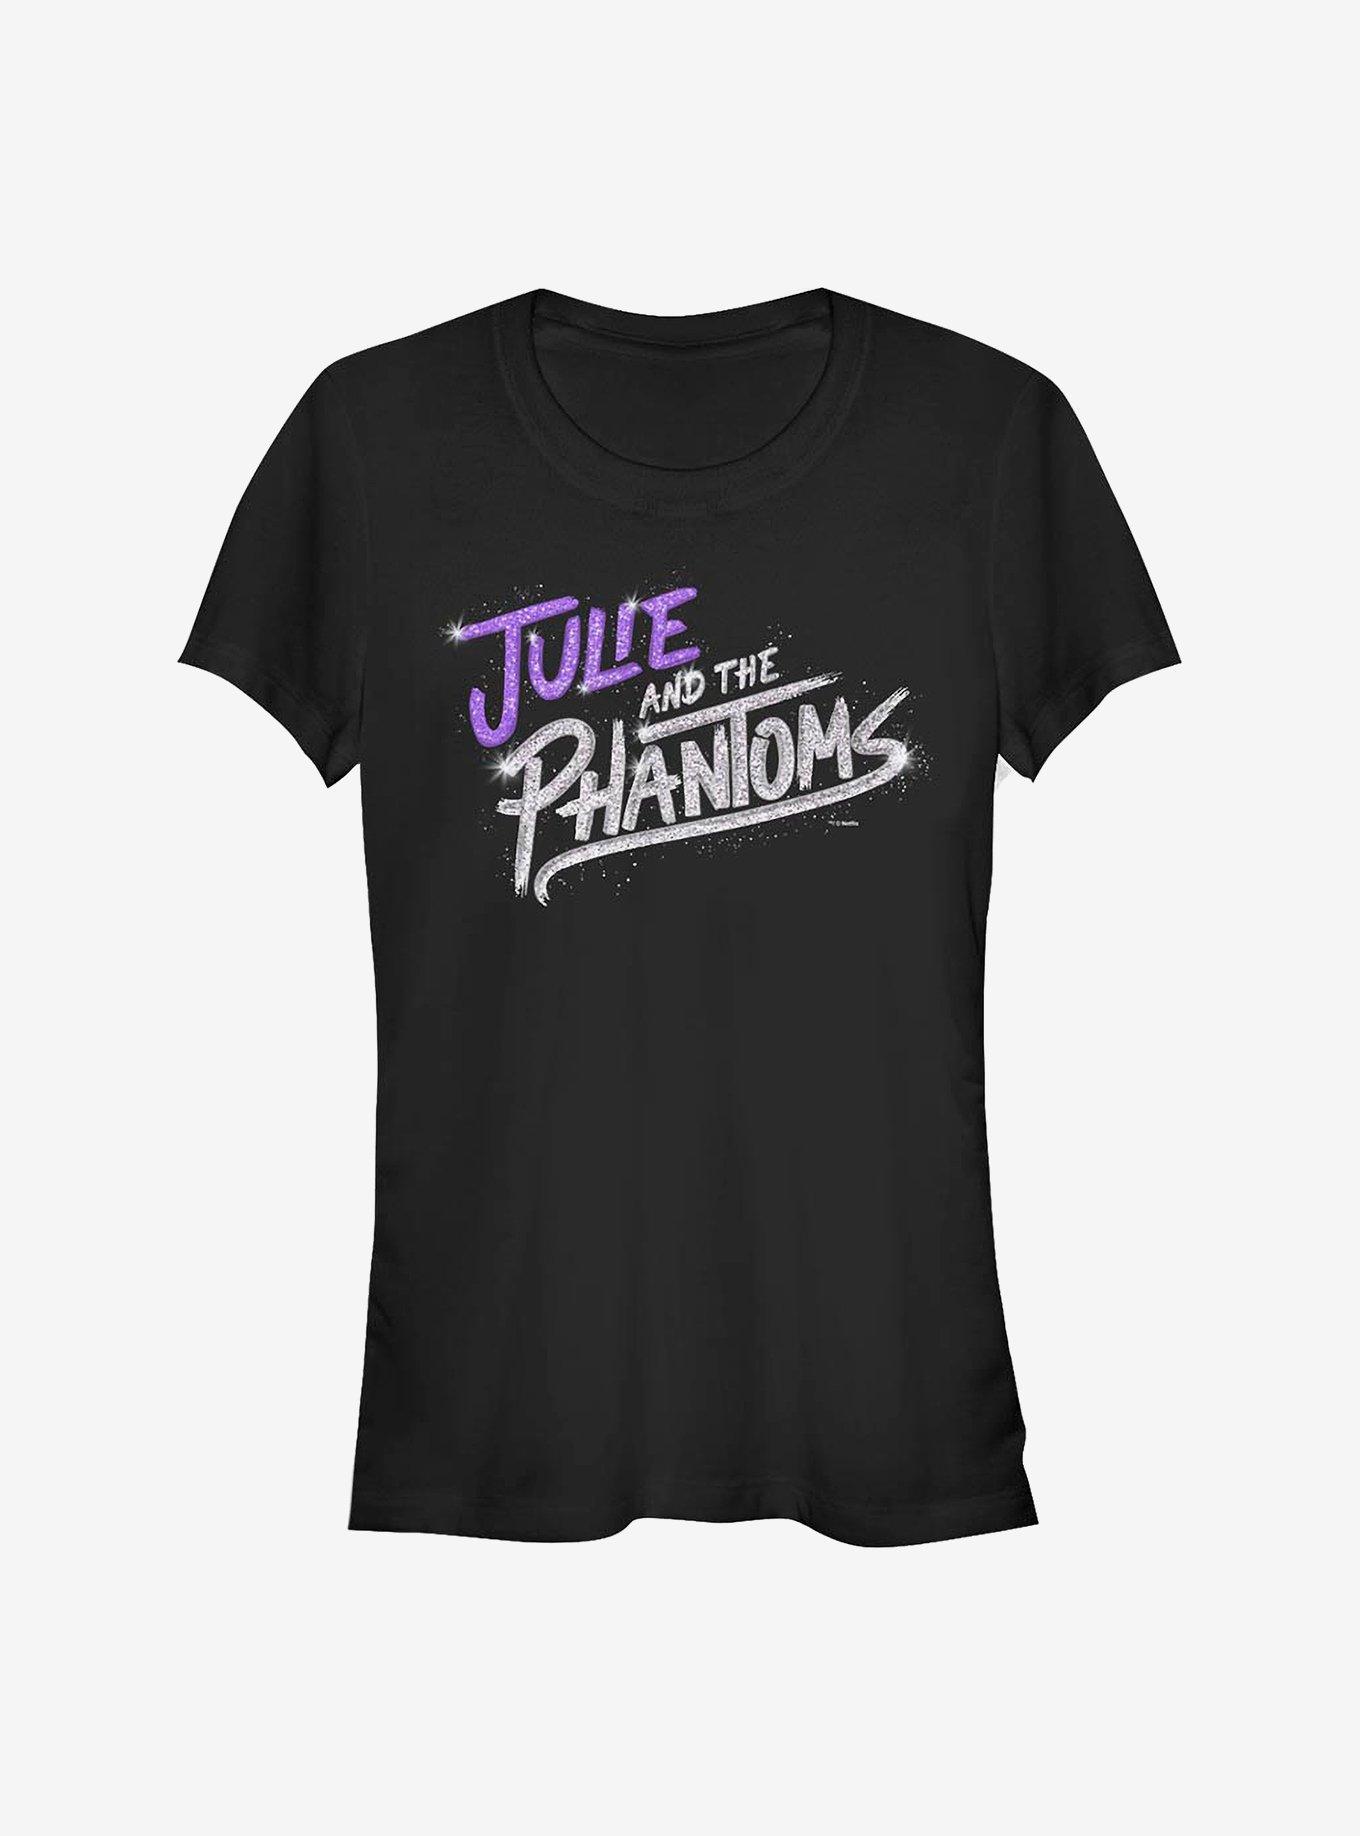 Julie And The Phantoms Bling Logo Girls T-Shirt, BLACK, hi-res